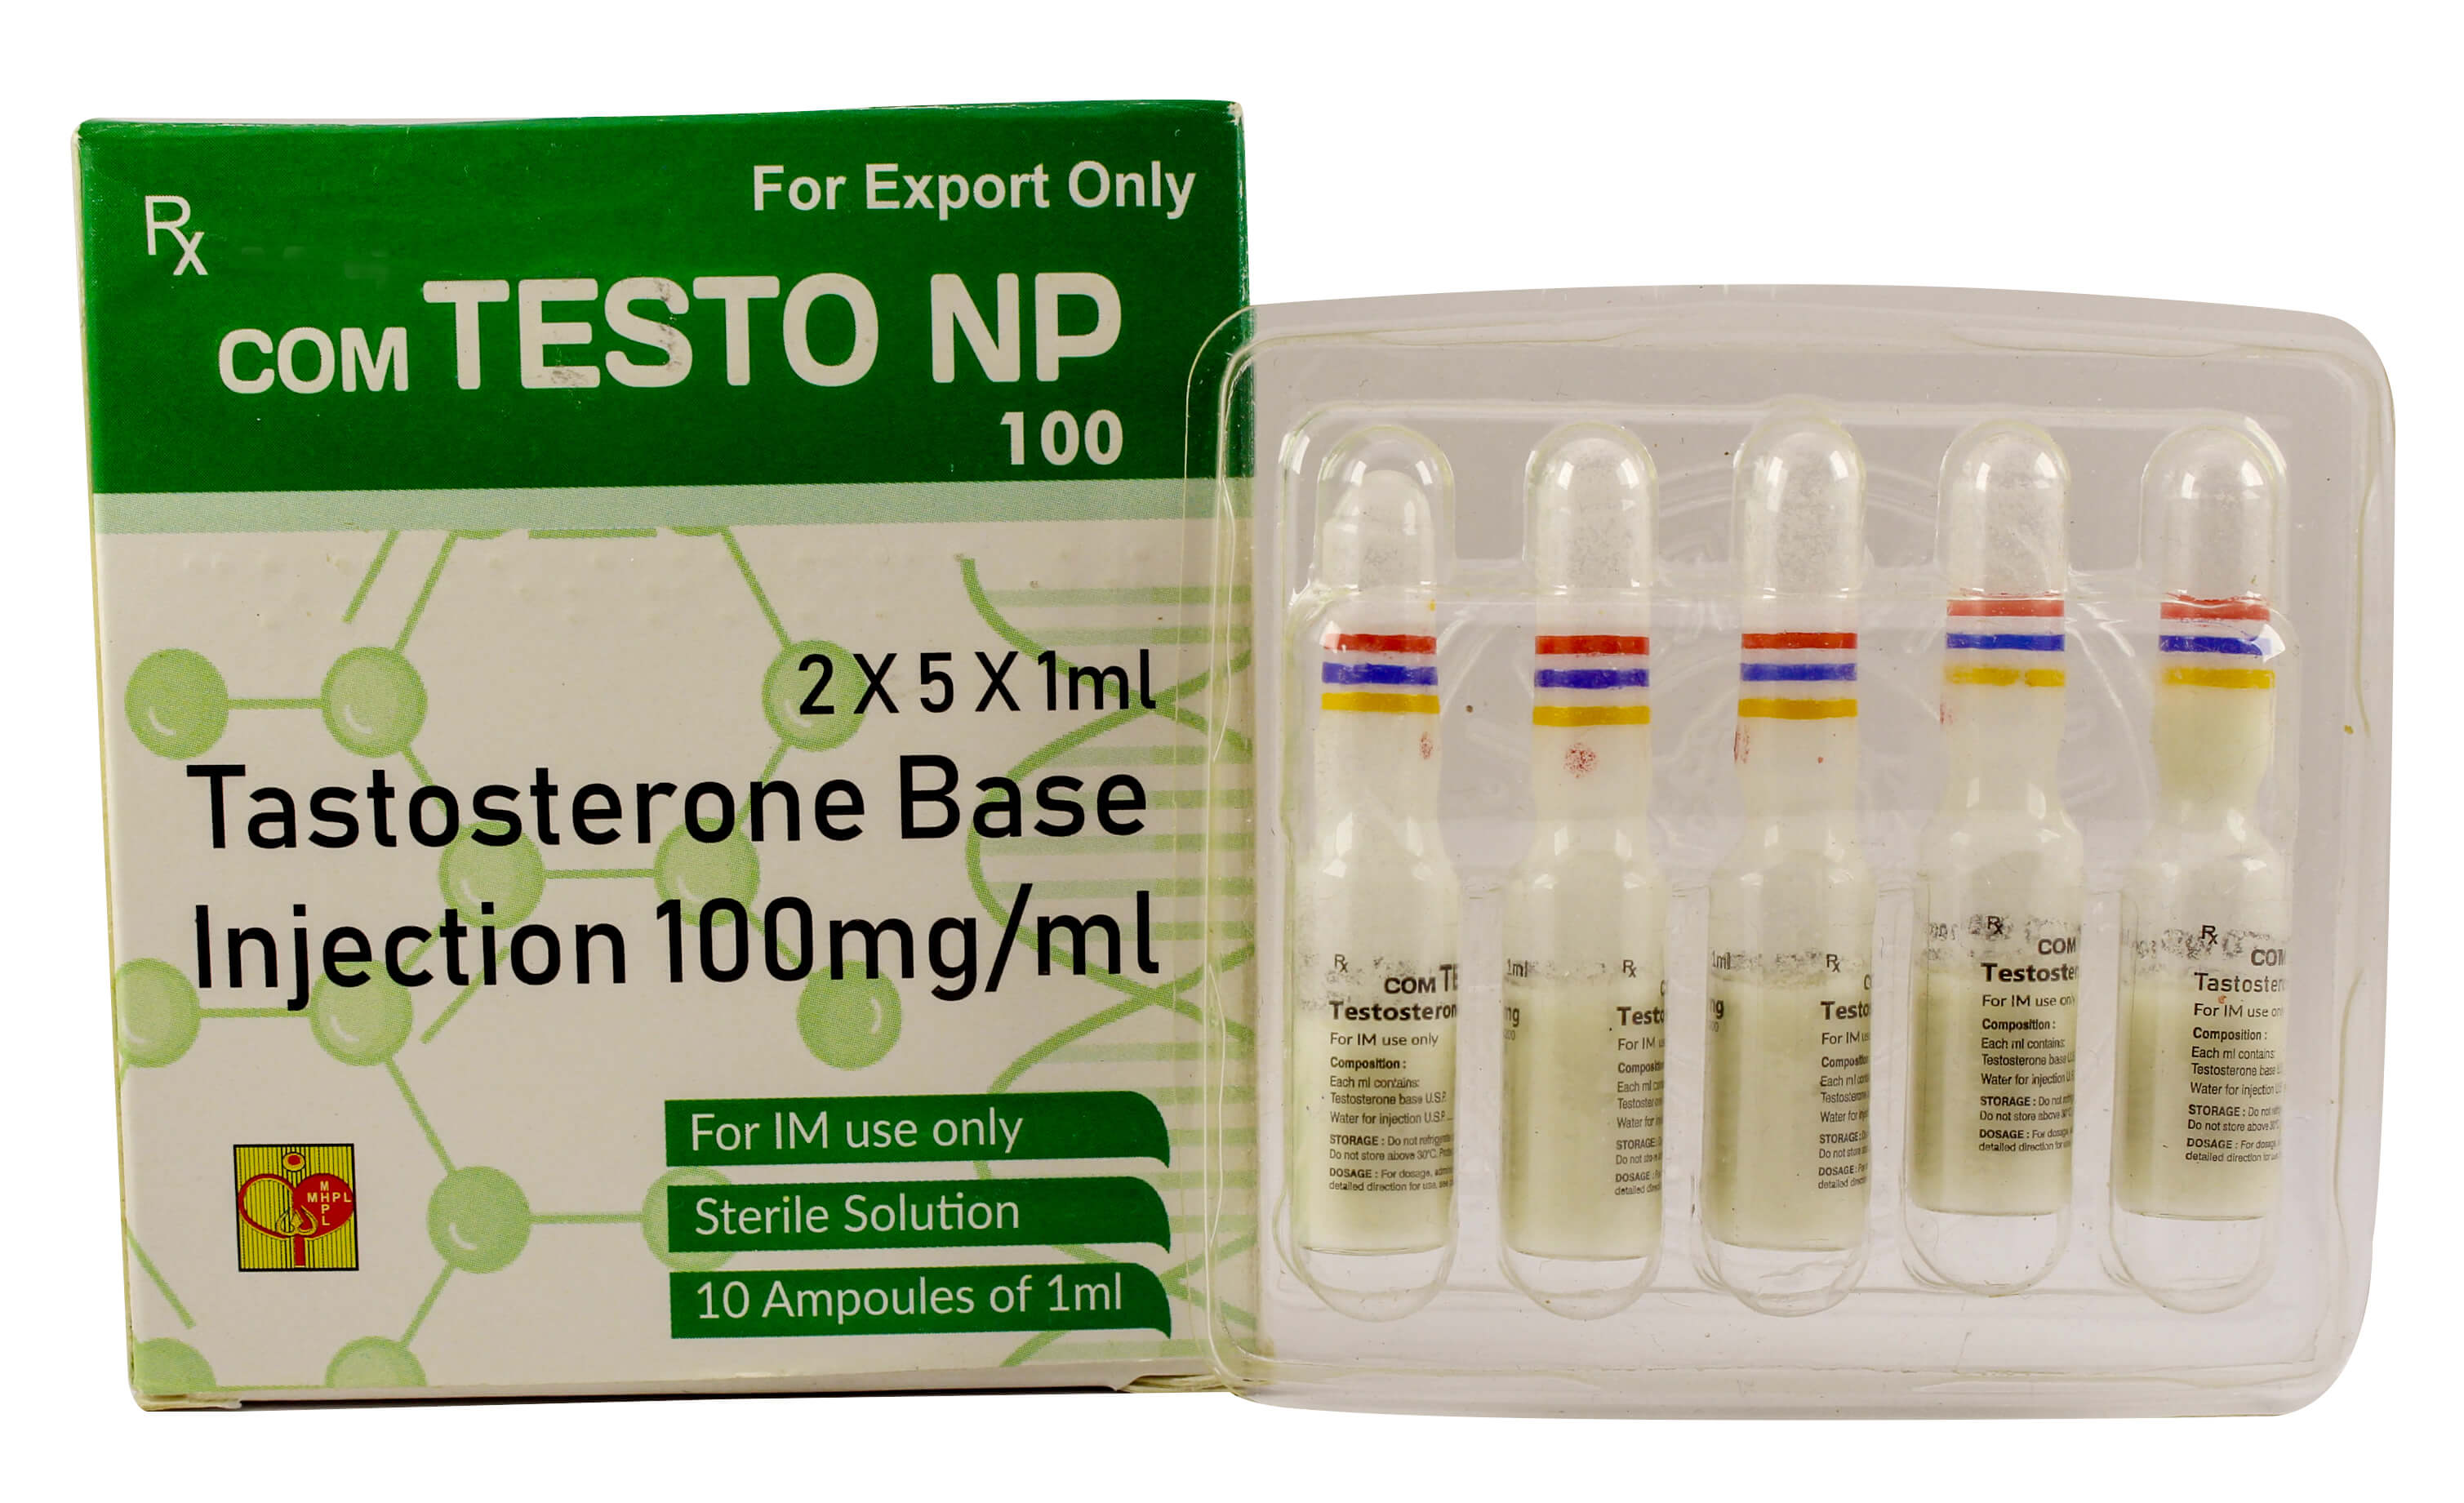 Com-Testo-NP-100mg-injection